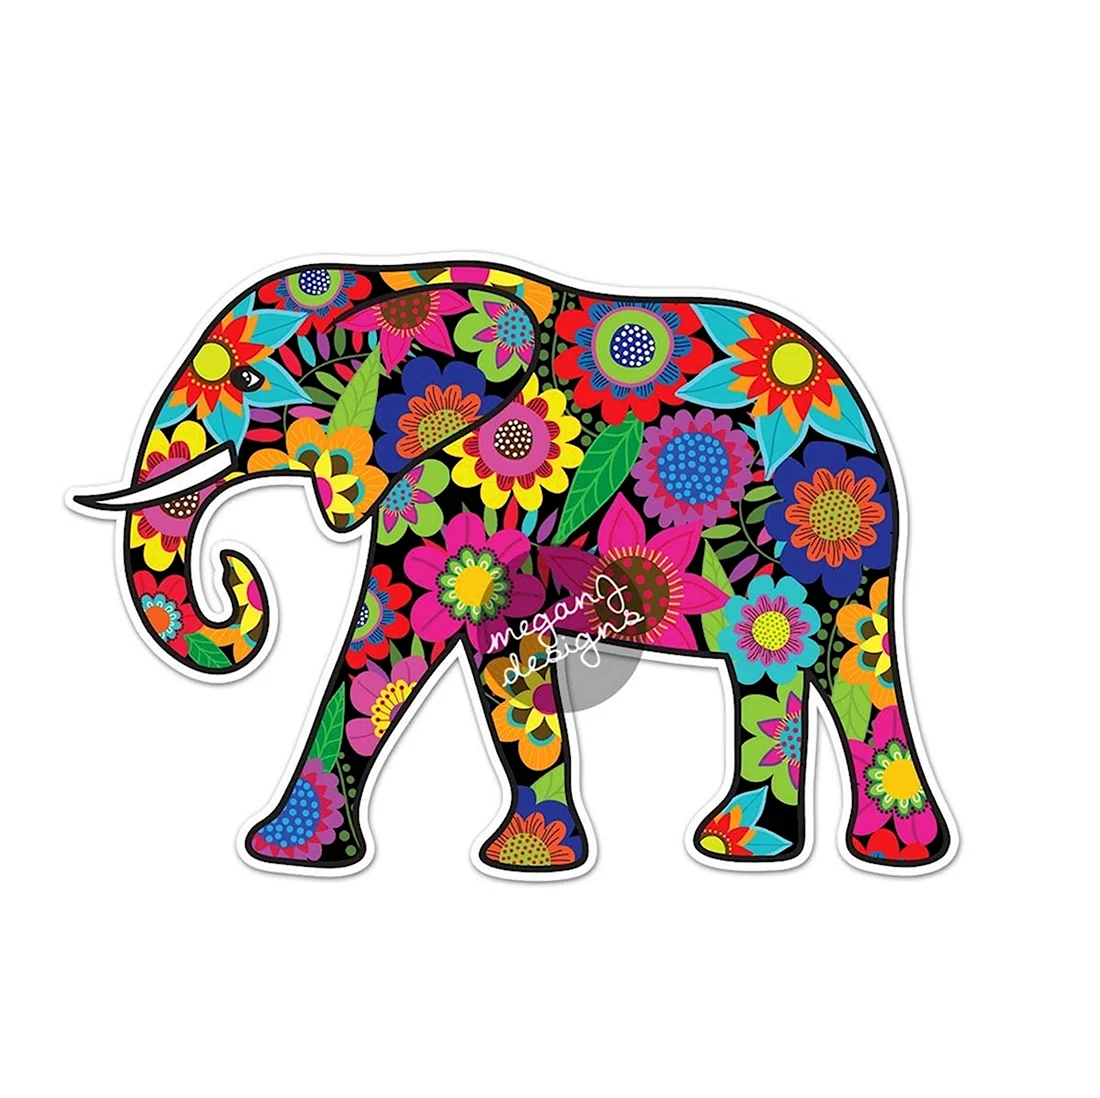 Индийский слон стилизация